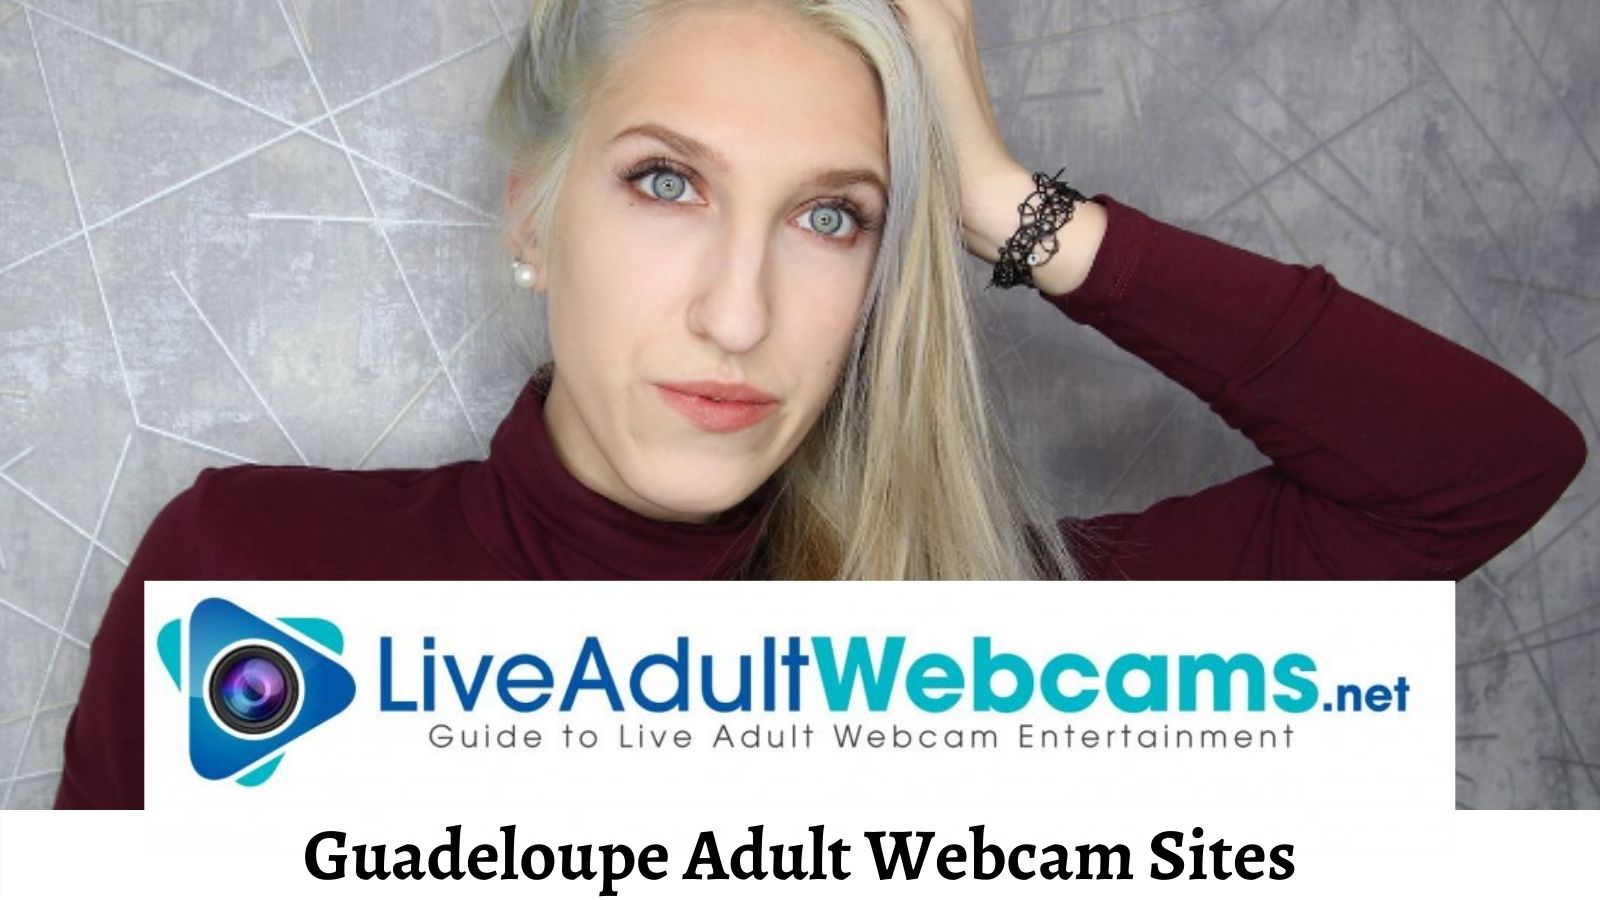 Guadeloupe Adult Webcam Sites Live Adult Webcams